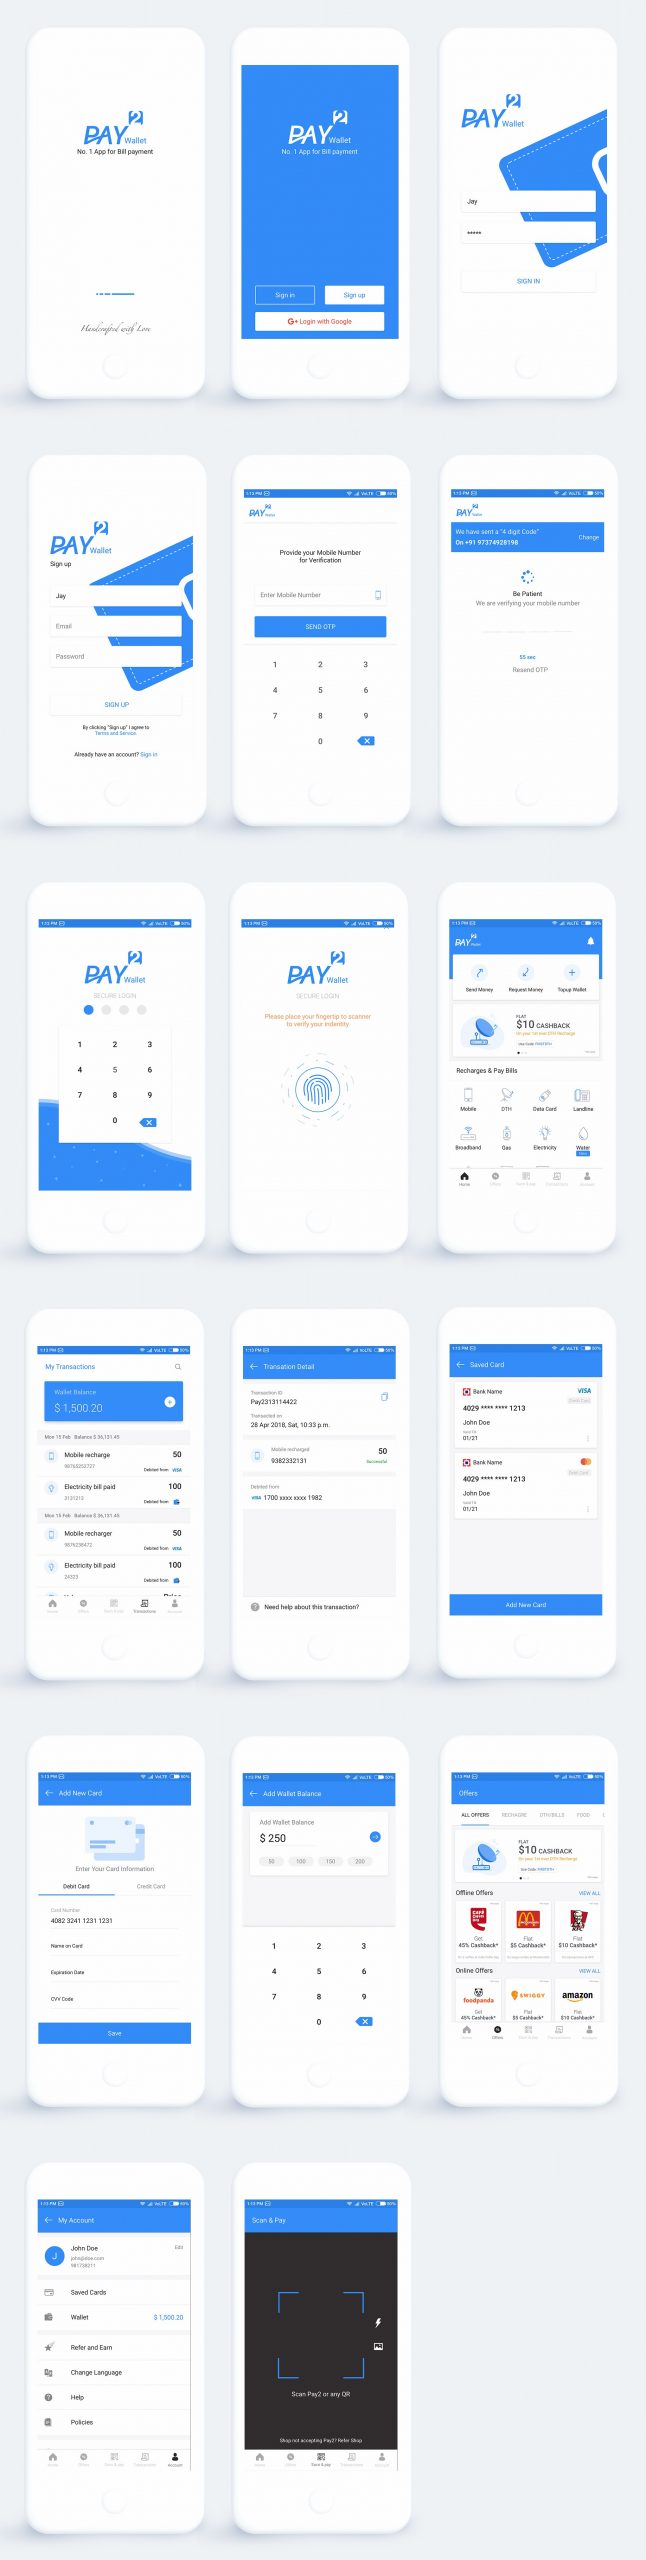 mobile-app-design-example